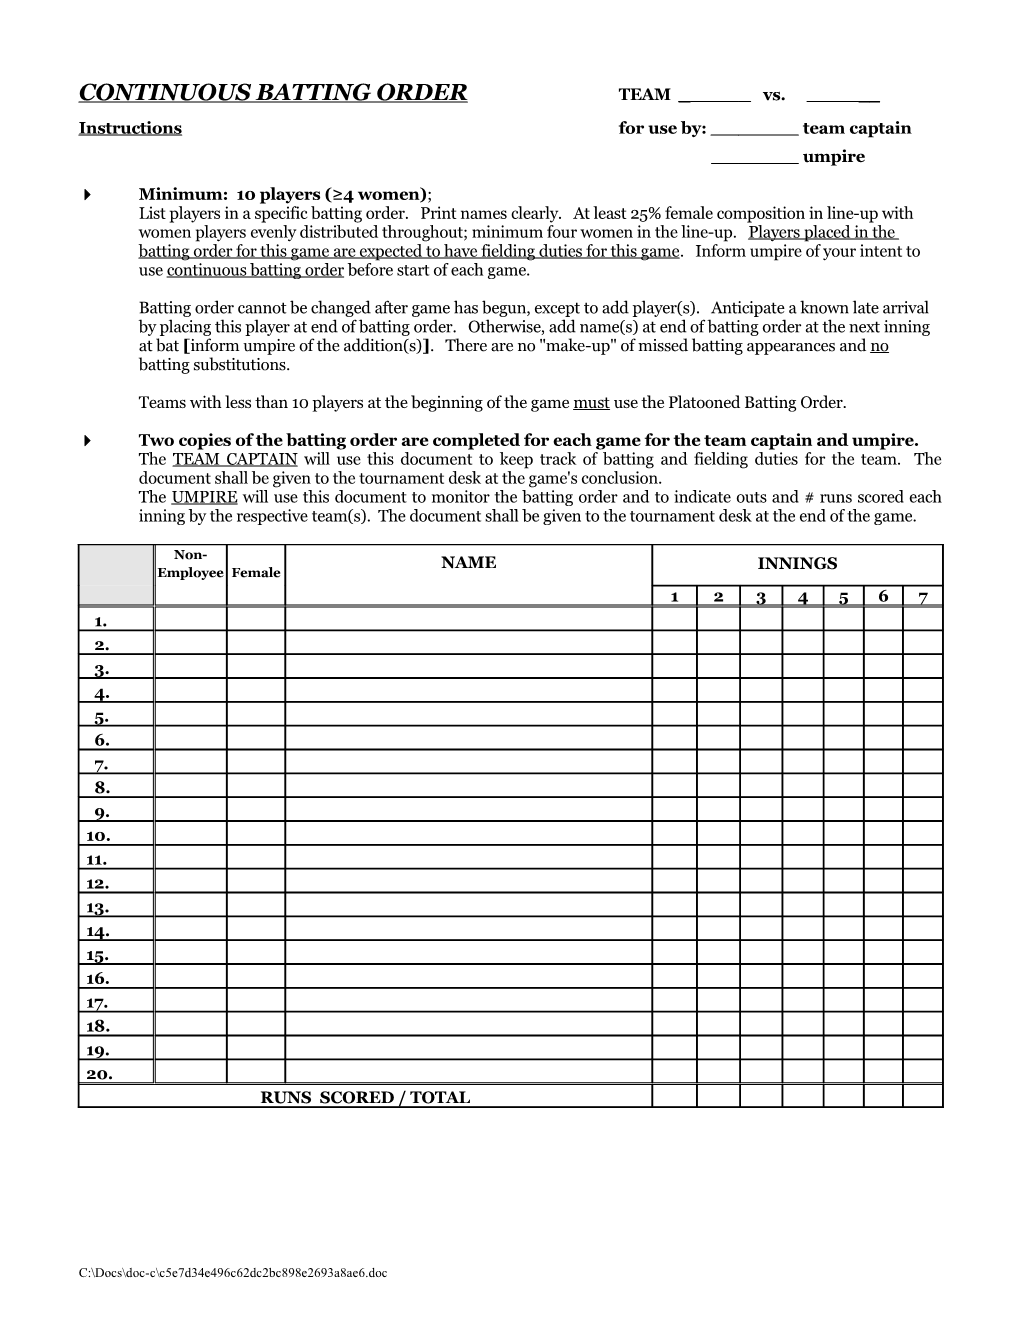 SB * Batting Order & Instructions Form